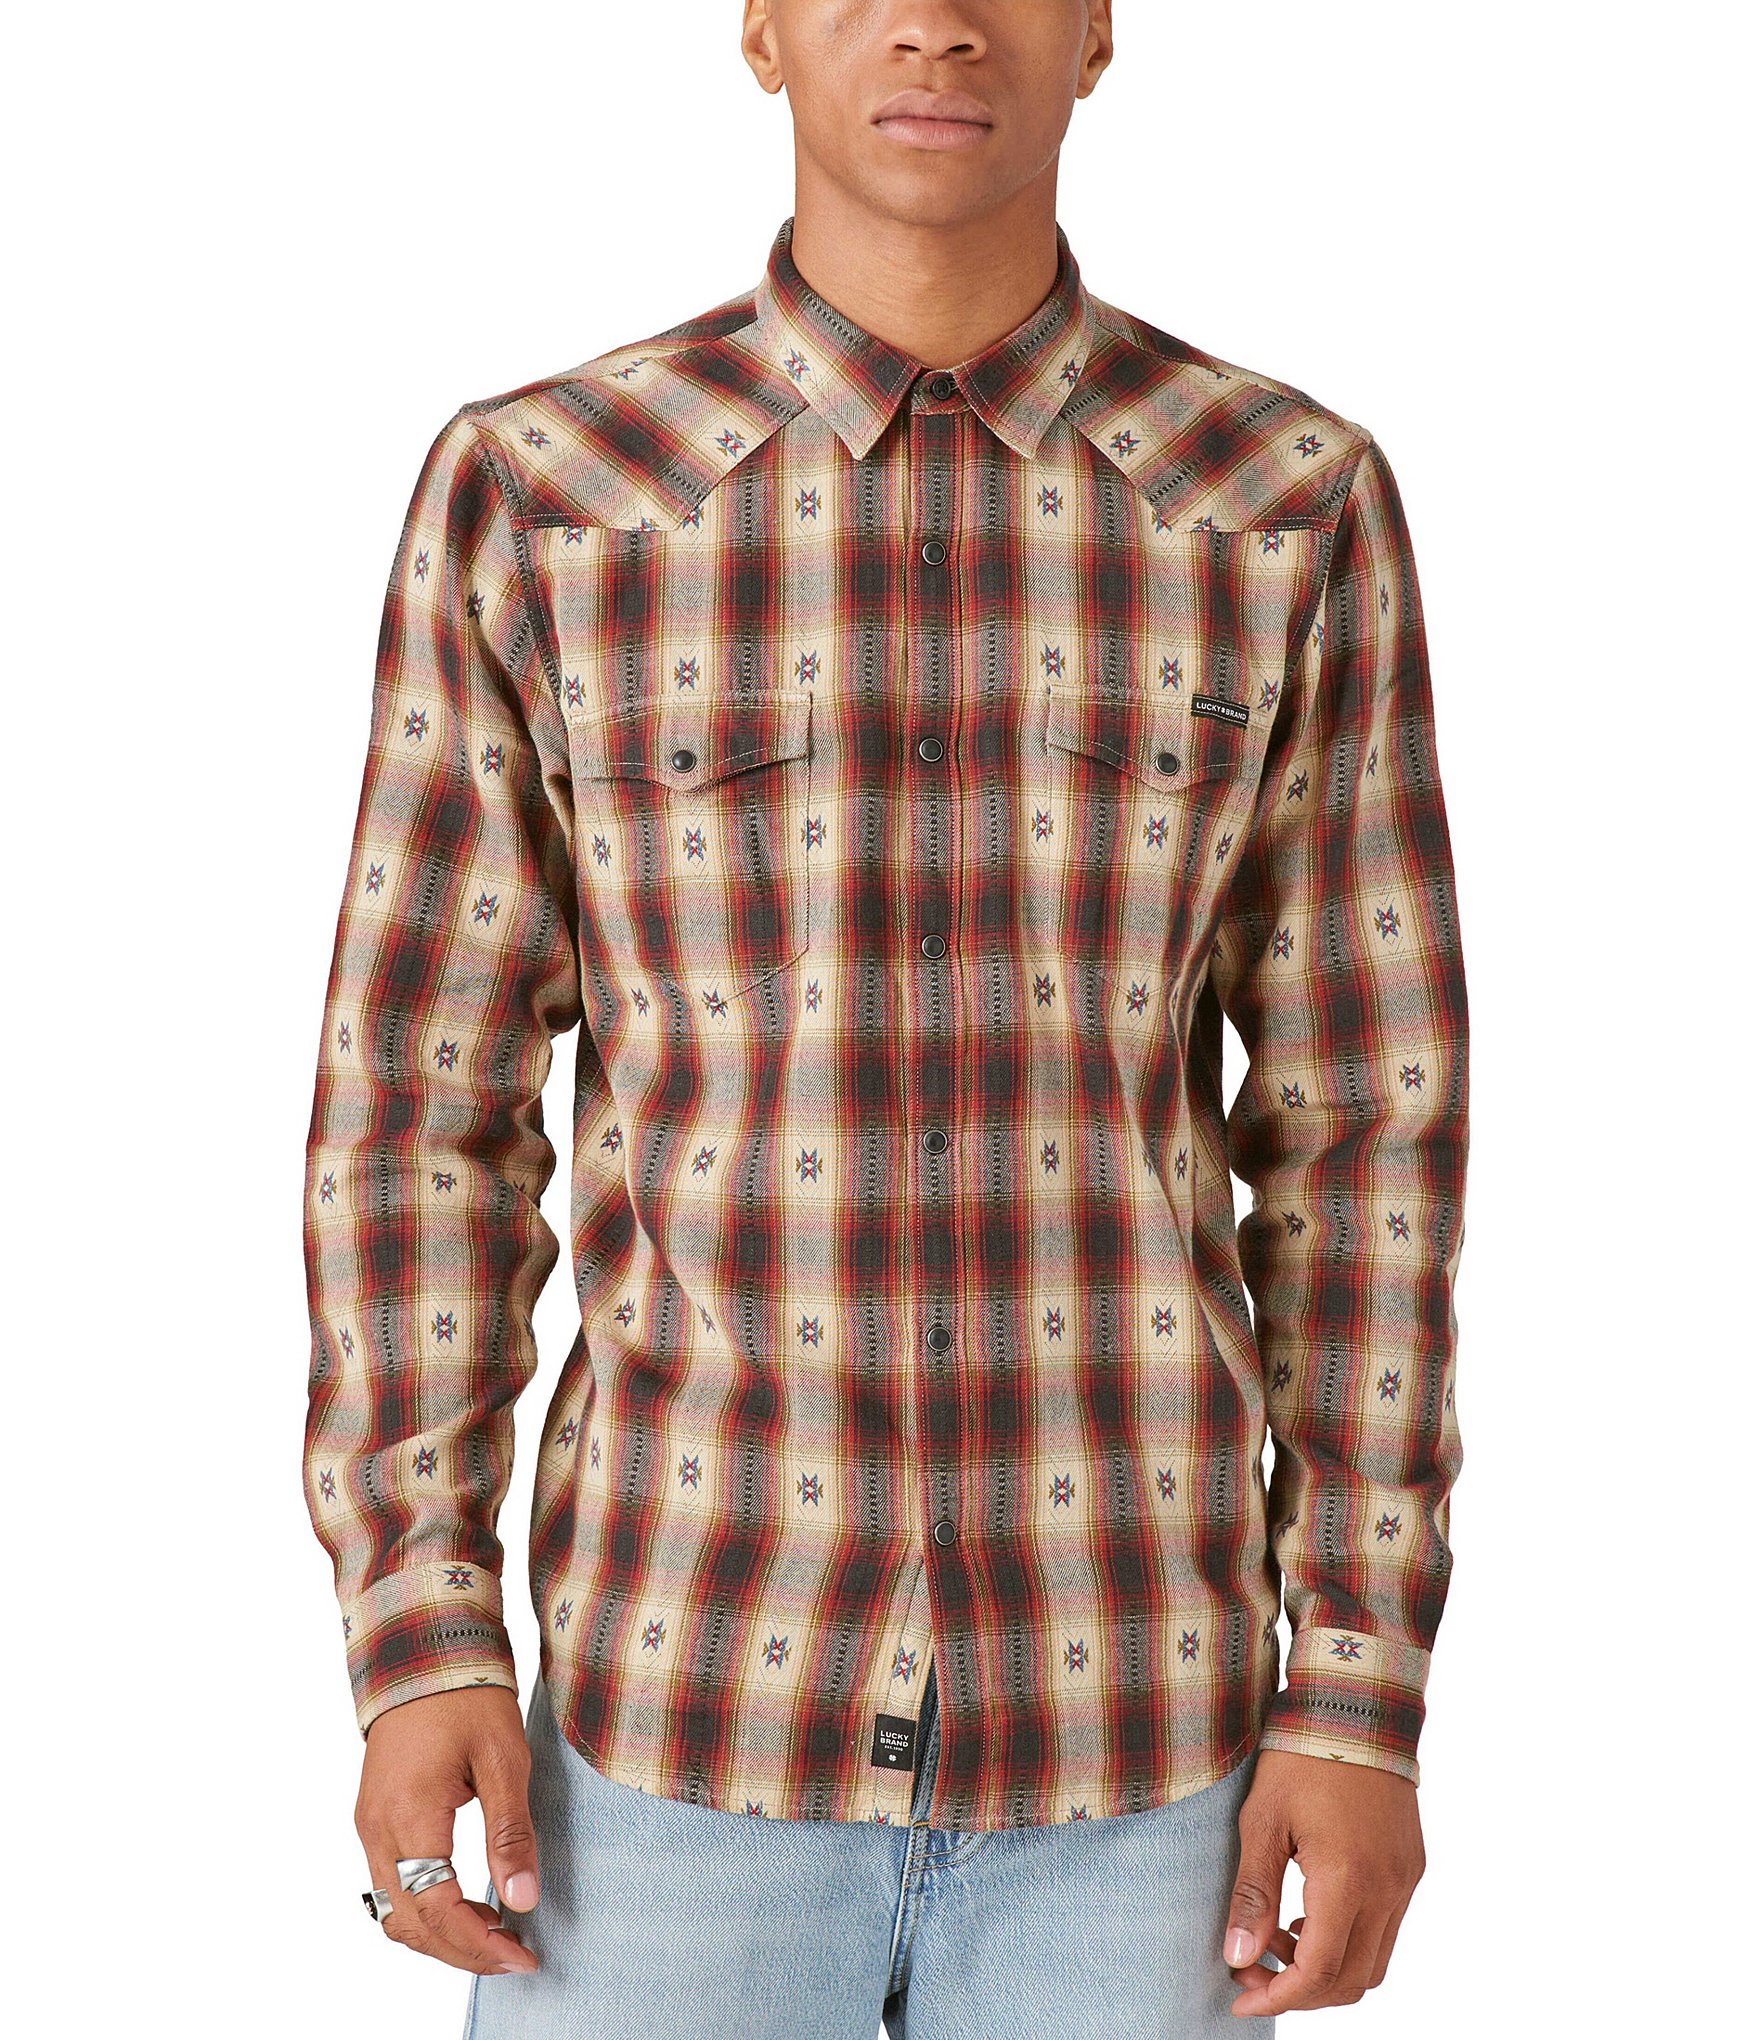 Lucky Brand Men's Plaid Dobby Western Long Sleeve Shirt, Red Plaid